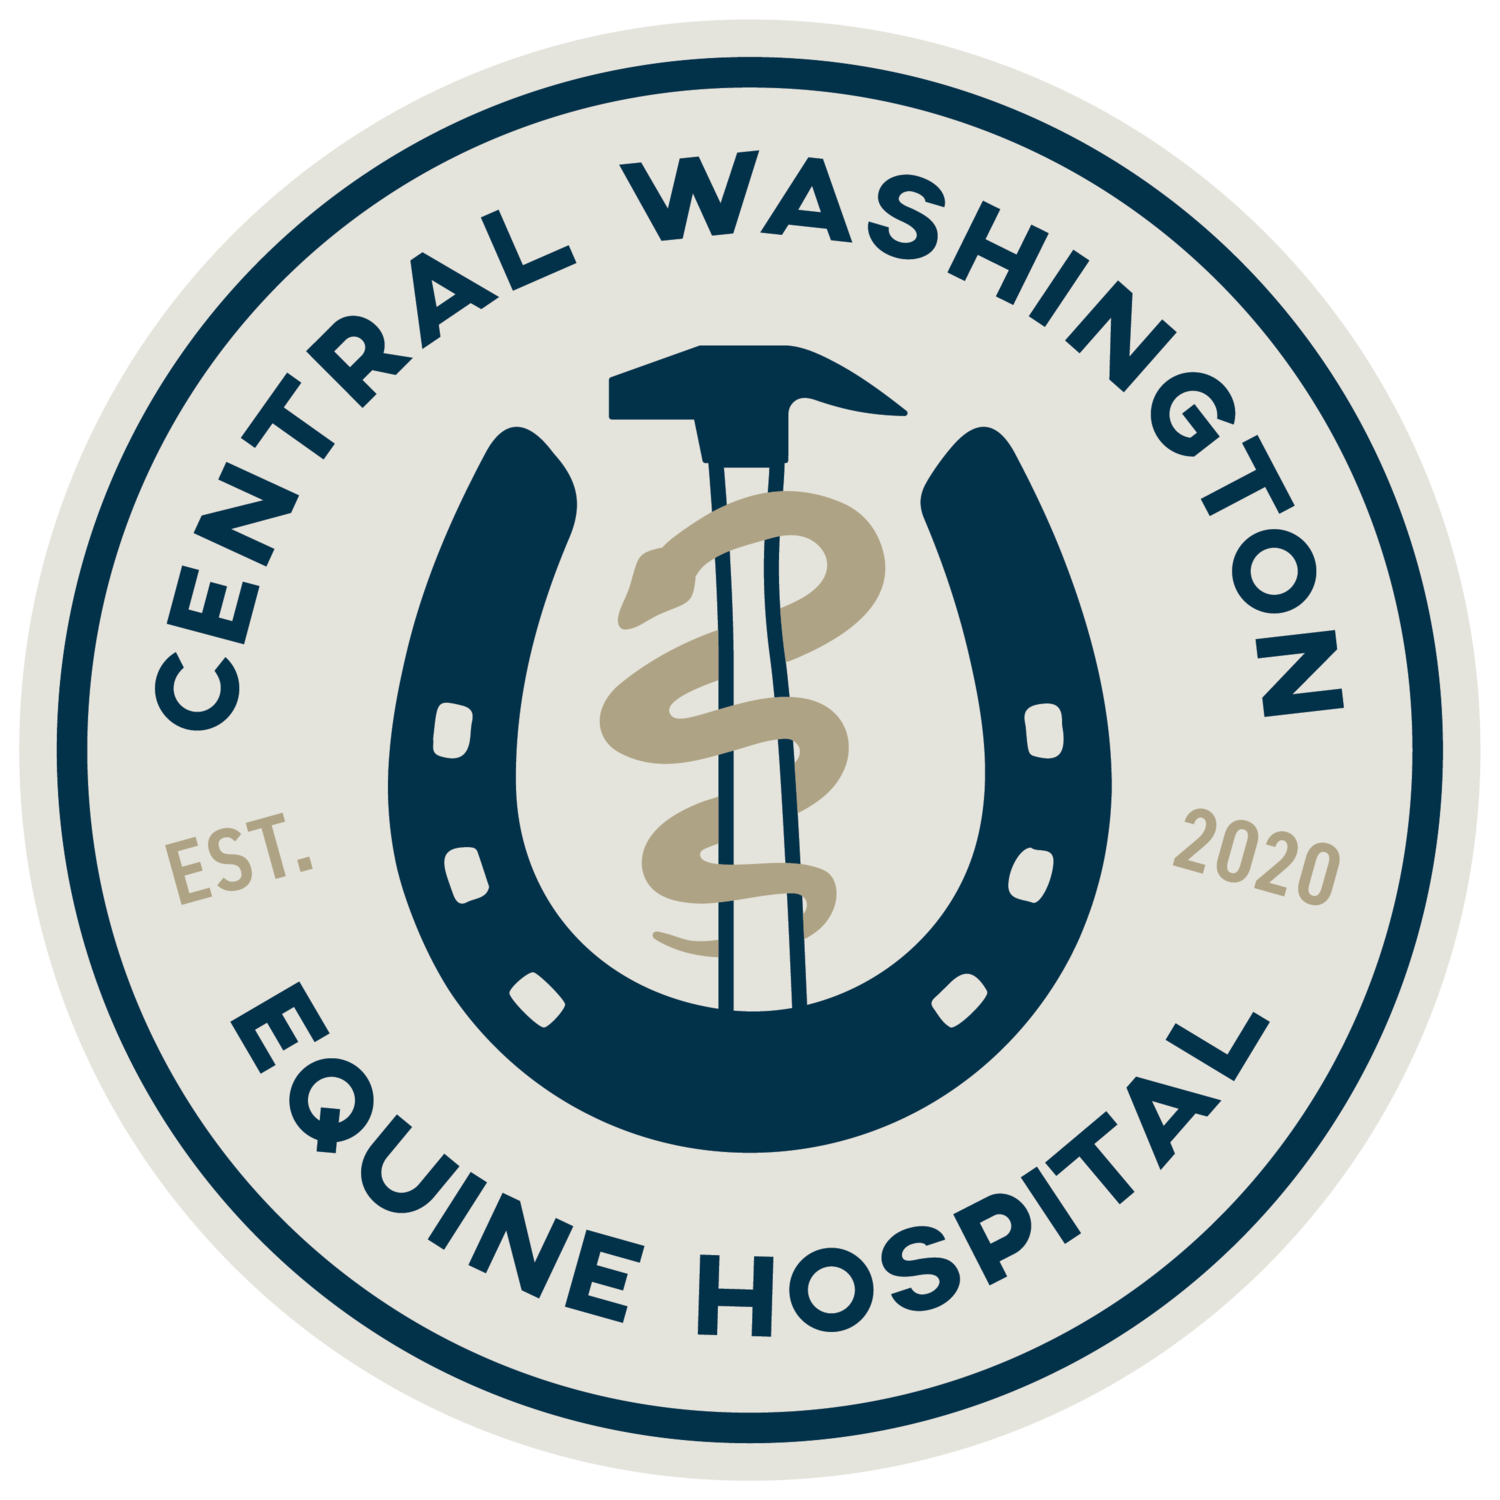 Central Washington Equine Hospital